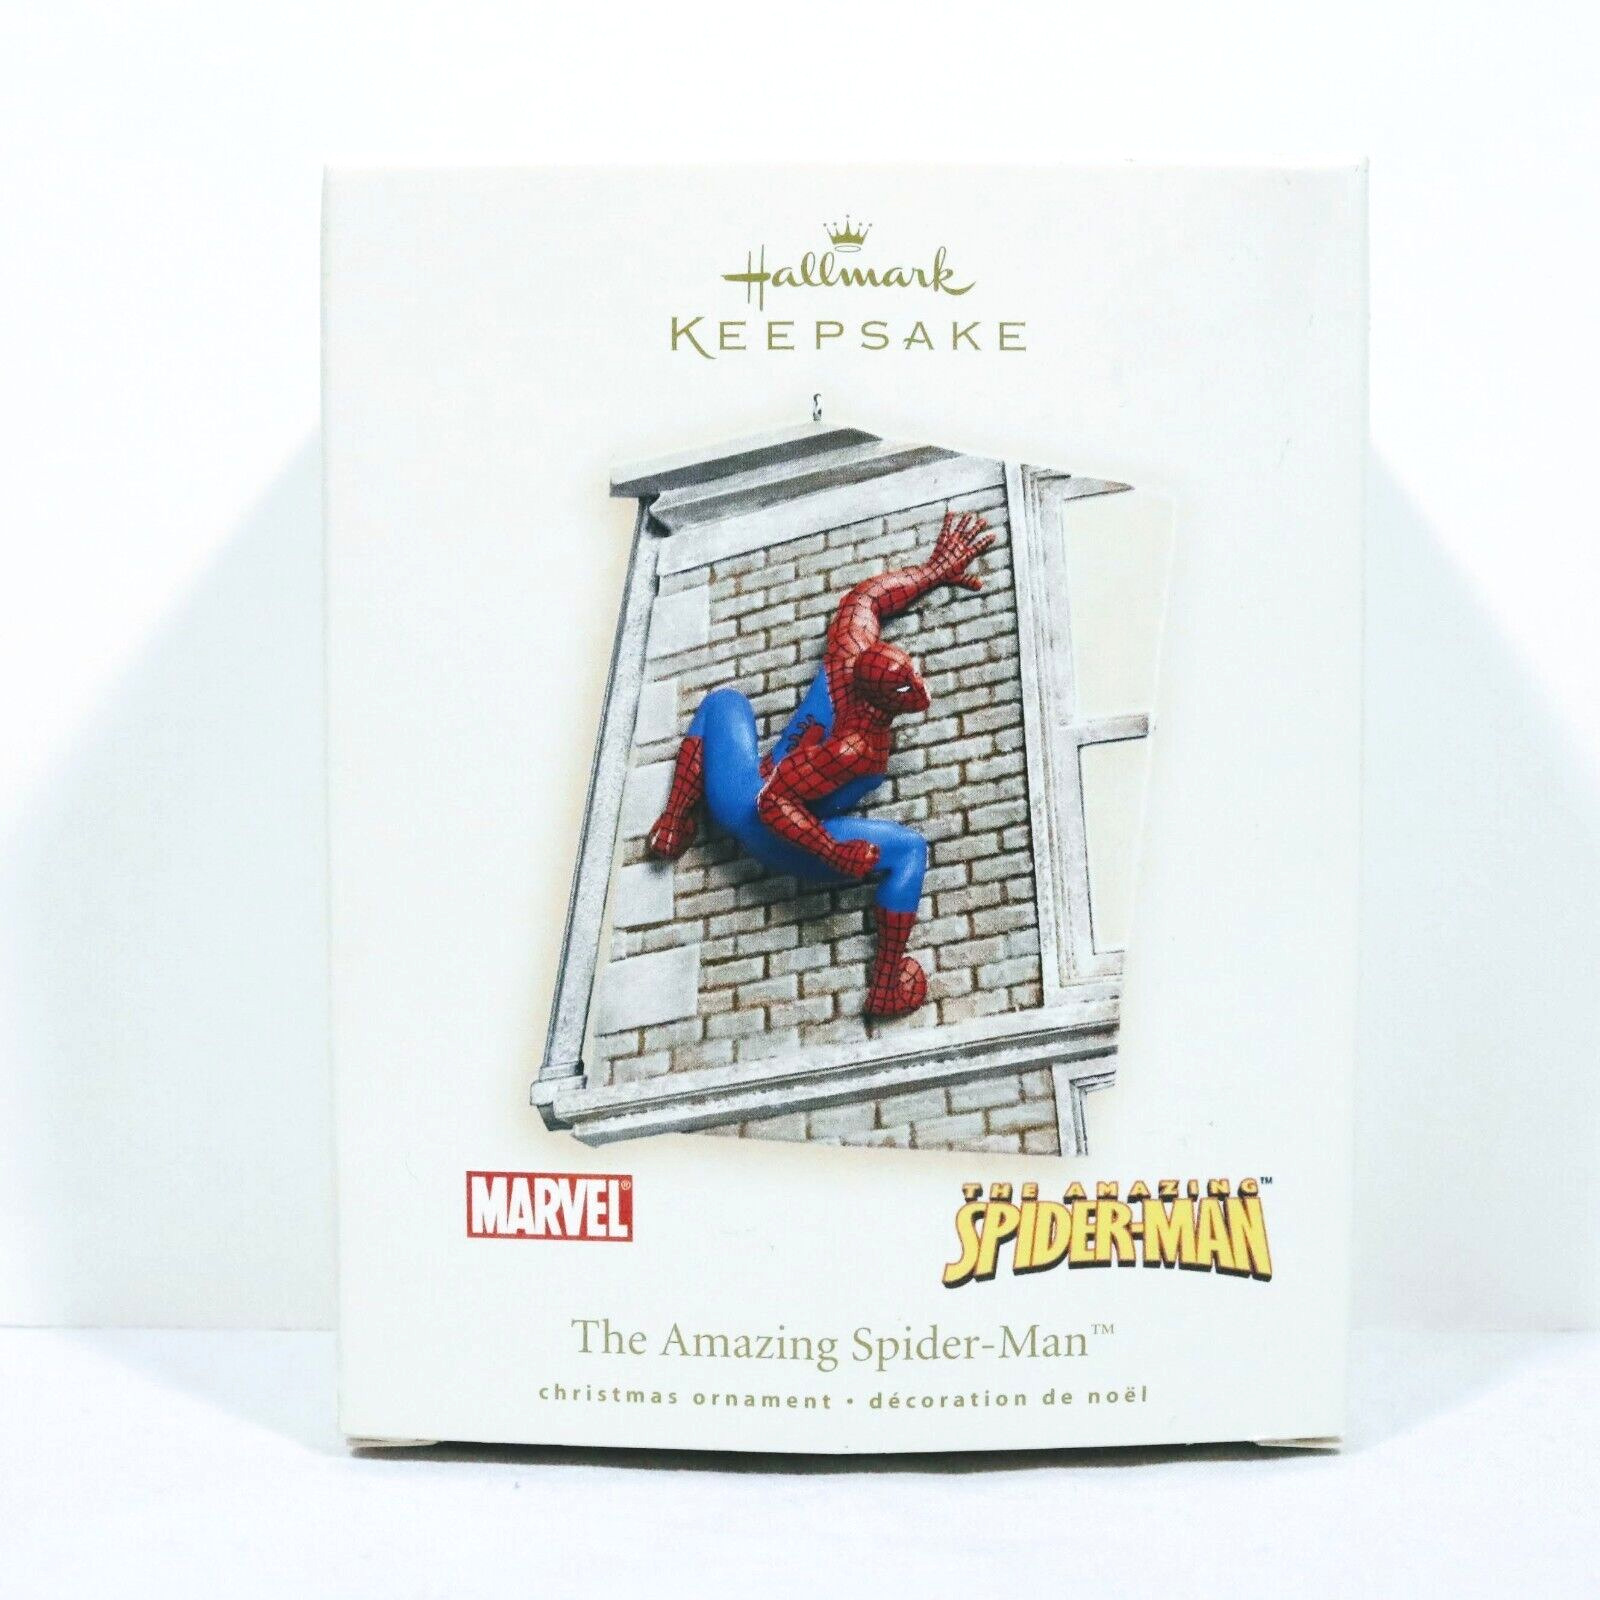 2007 Ornament The Amazing Spider-Man Hallmark Keepsake